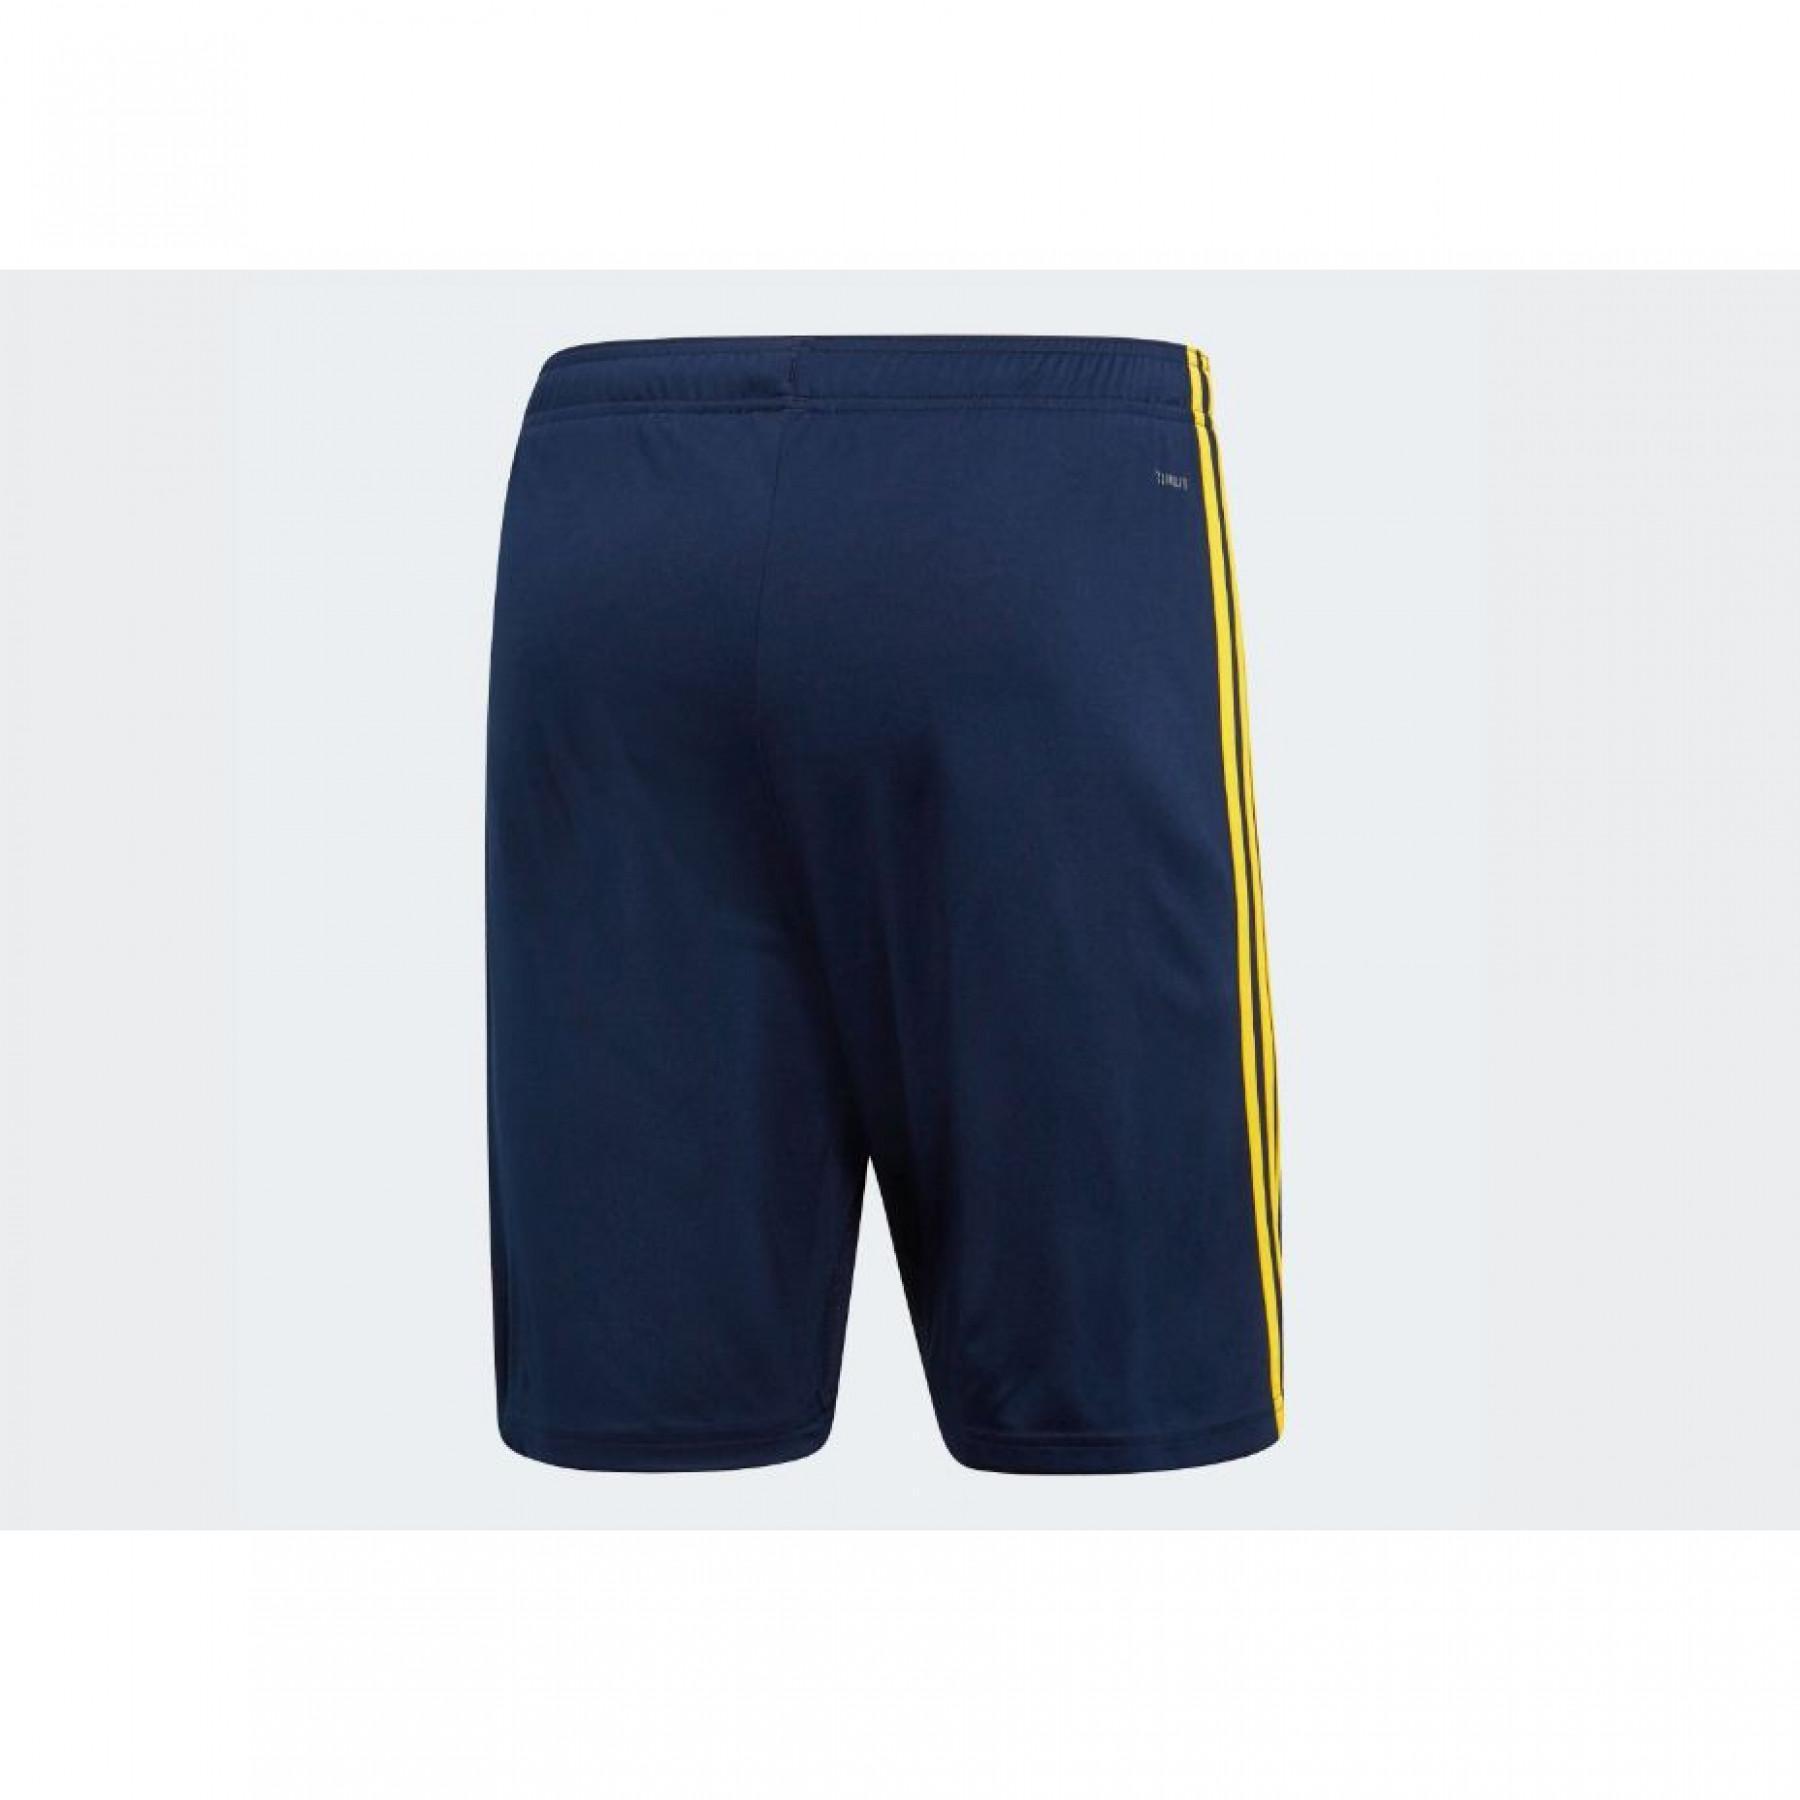 Pantalones cortos para exteriores Arsenal 2019/20